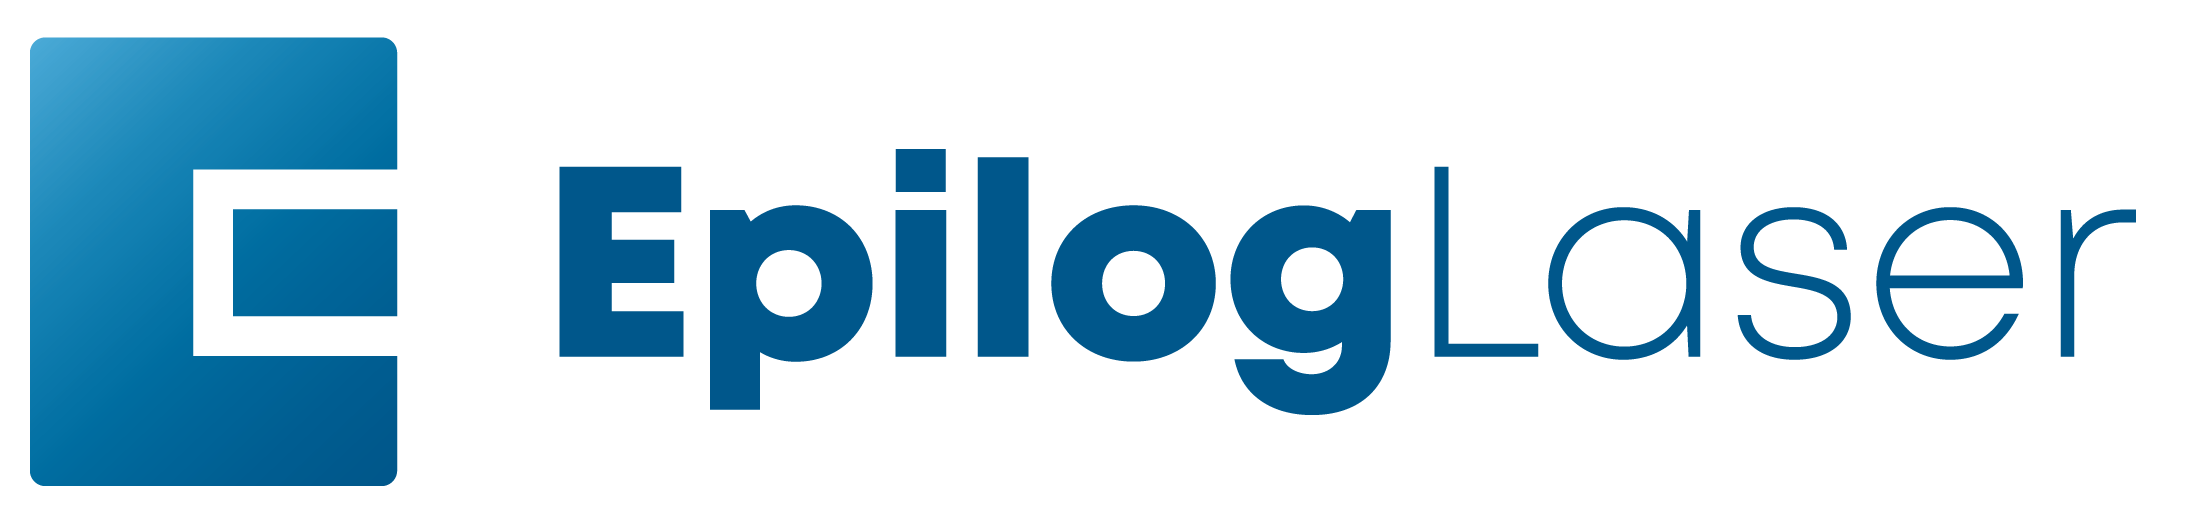 Epilog logo horiz